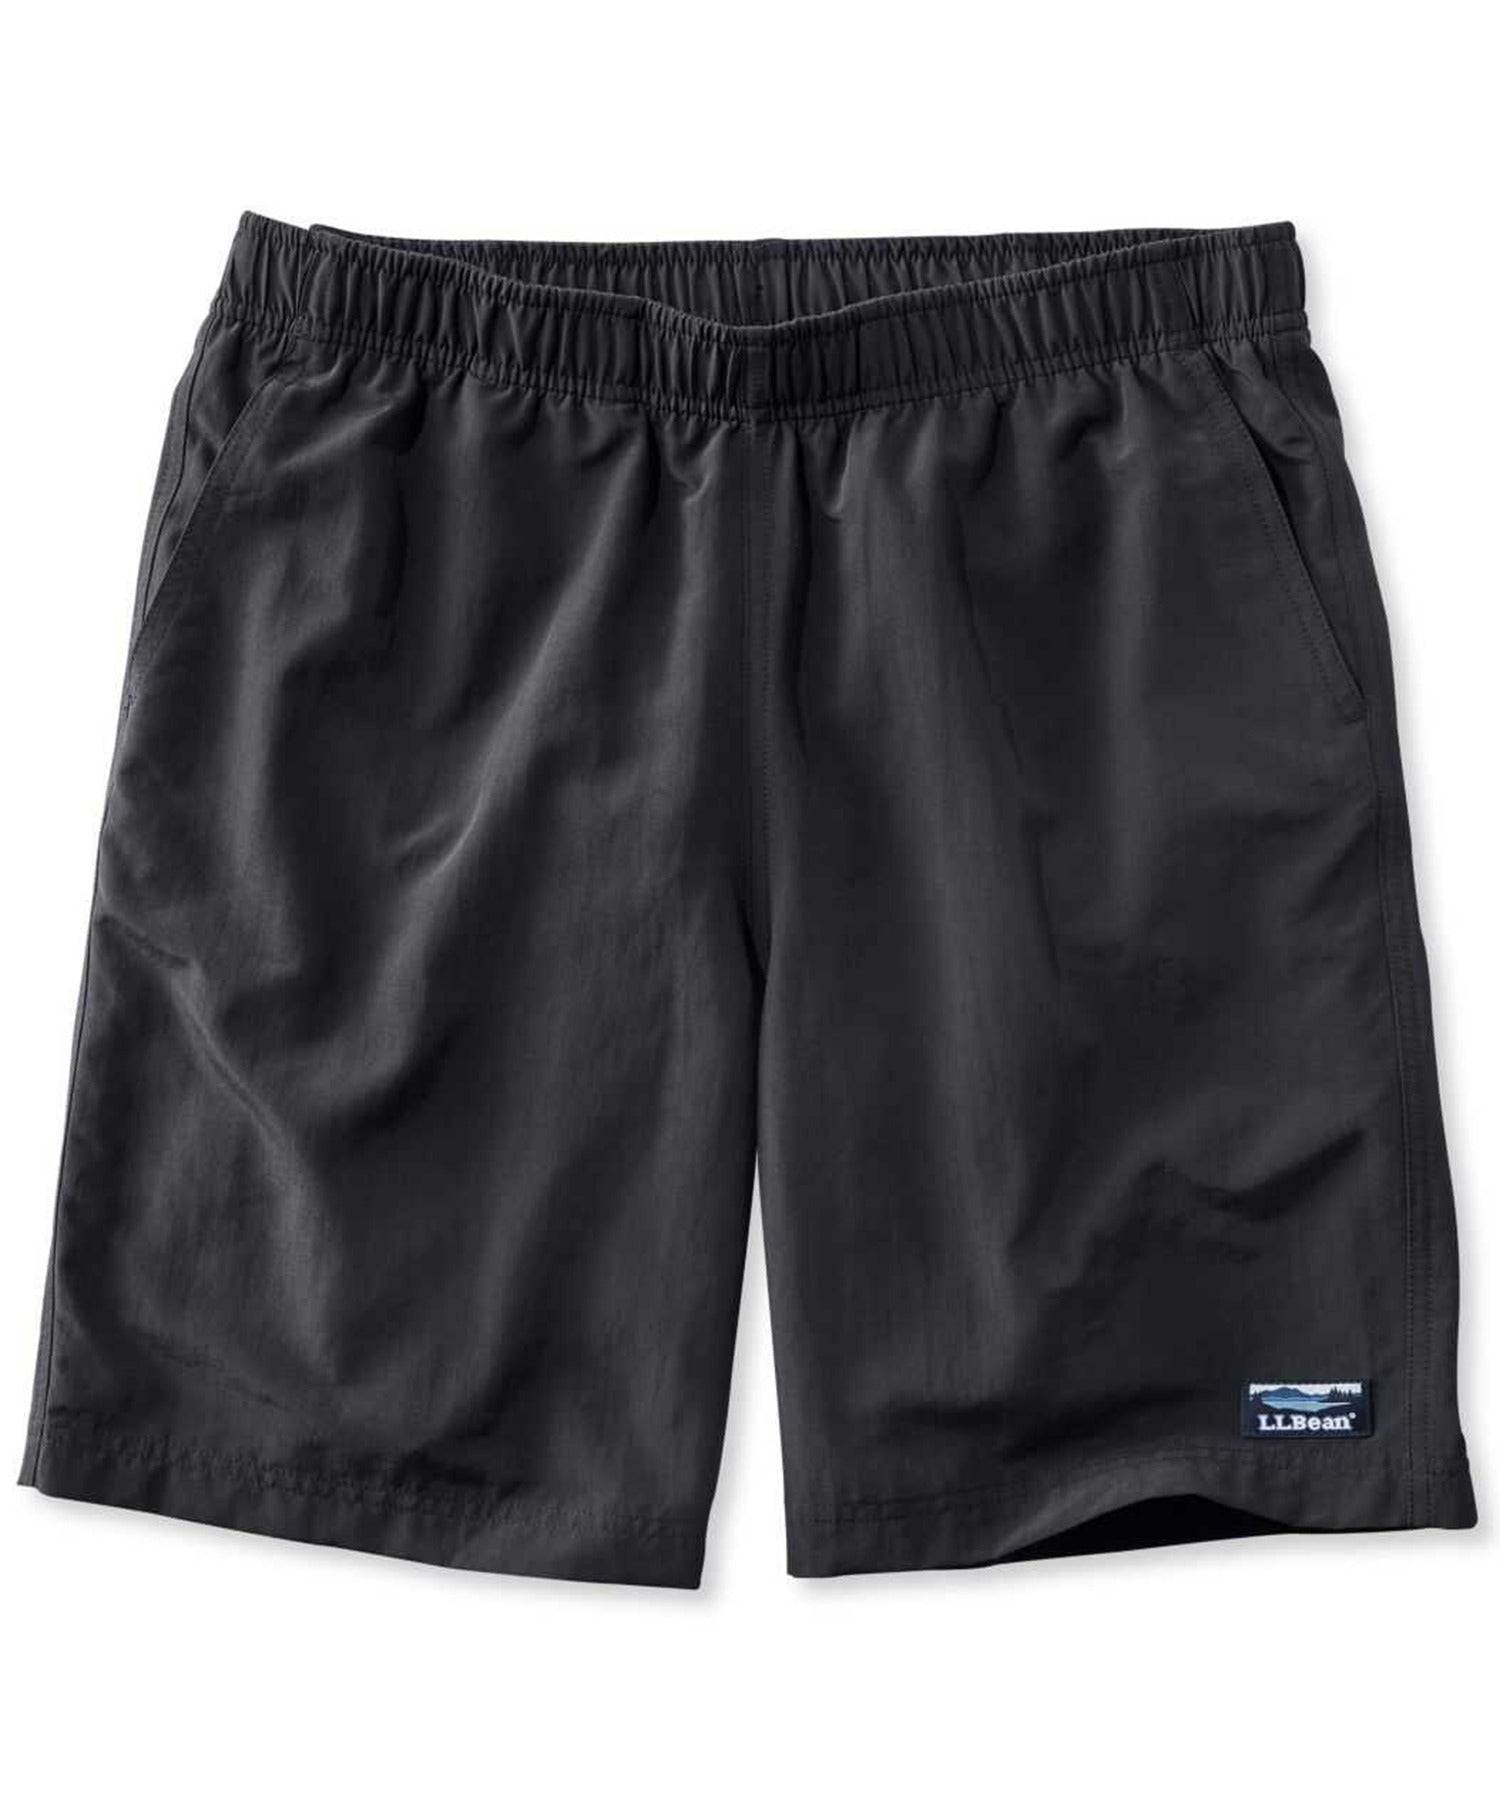 Classic Supplex Sport Shorts